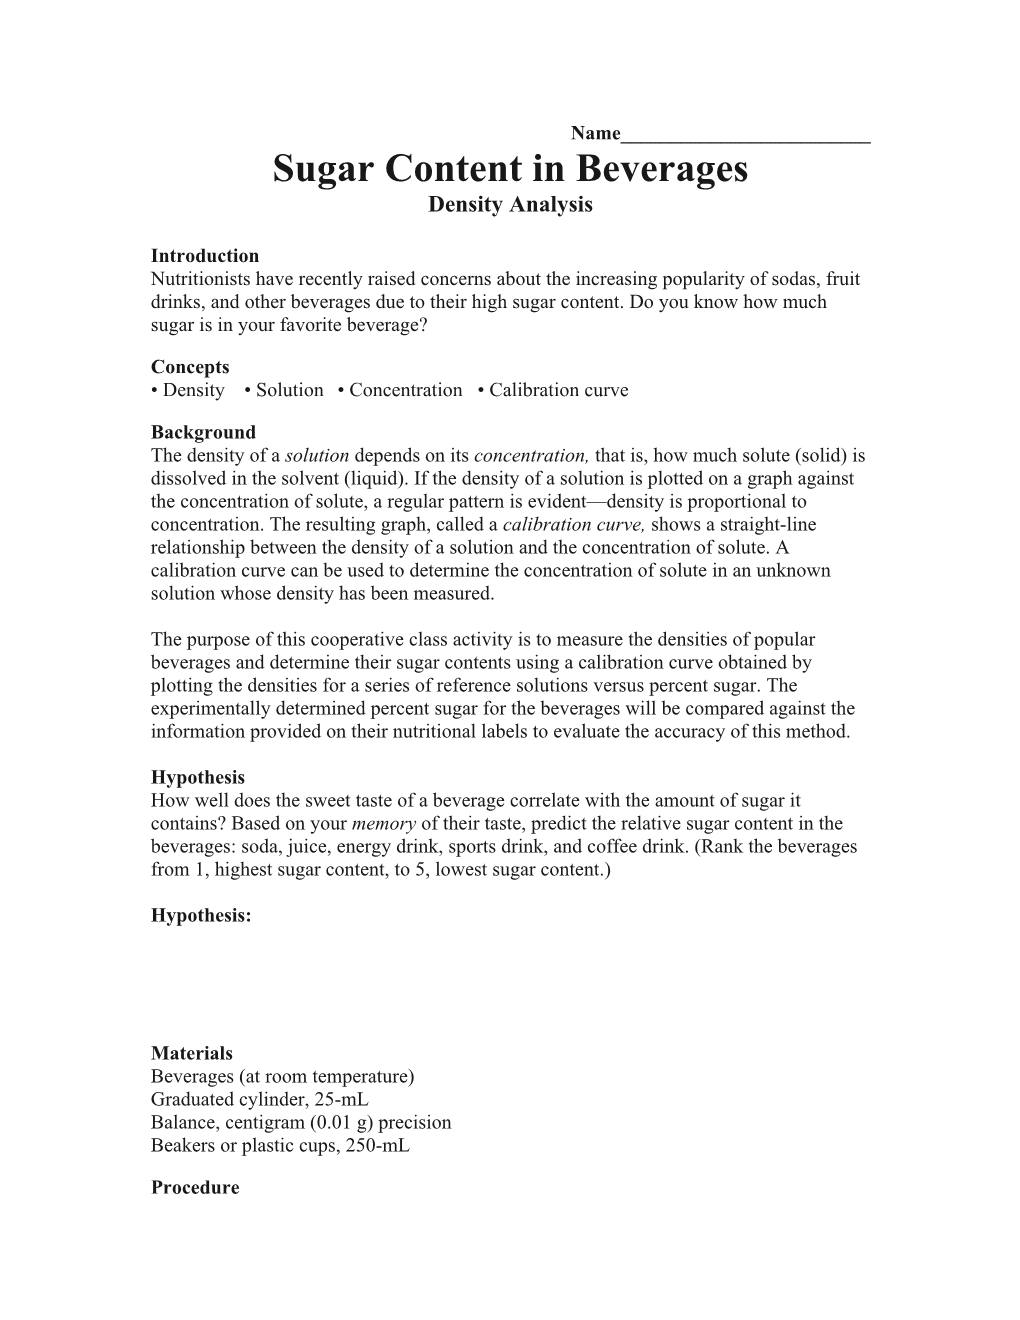 Sugar Content in Beverages